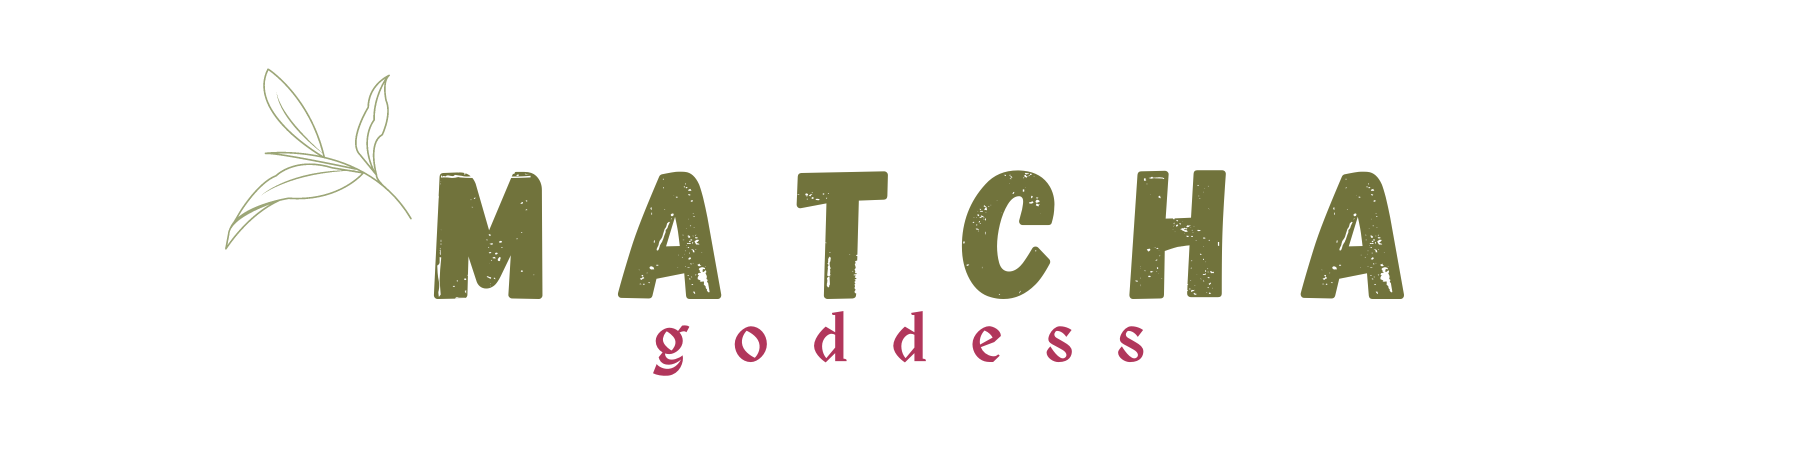 The Matcha Goddess logo